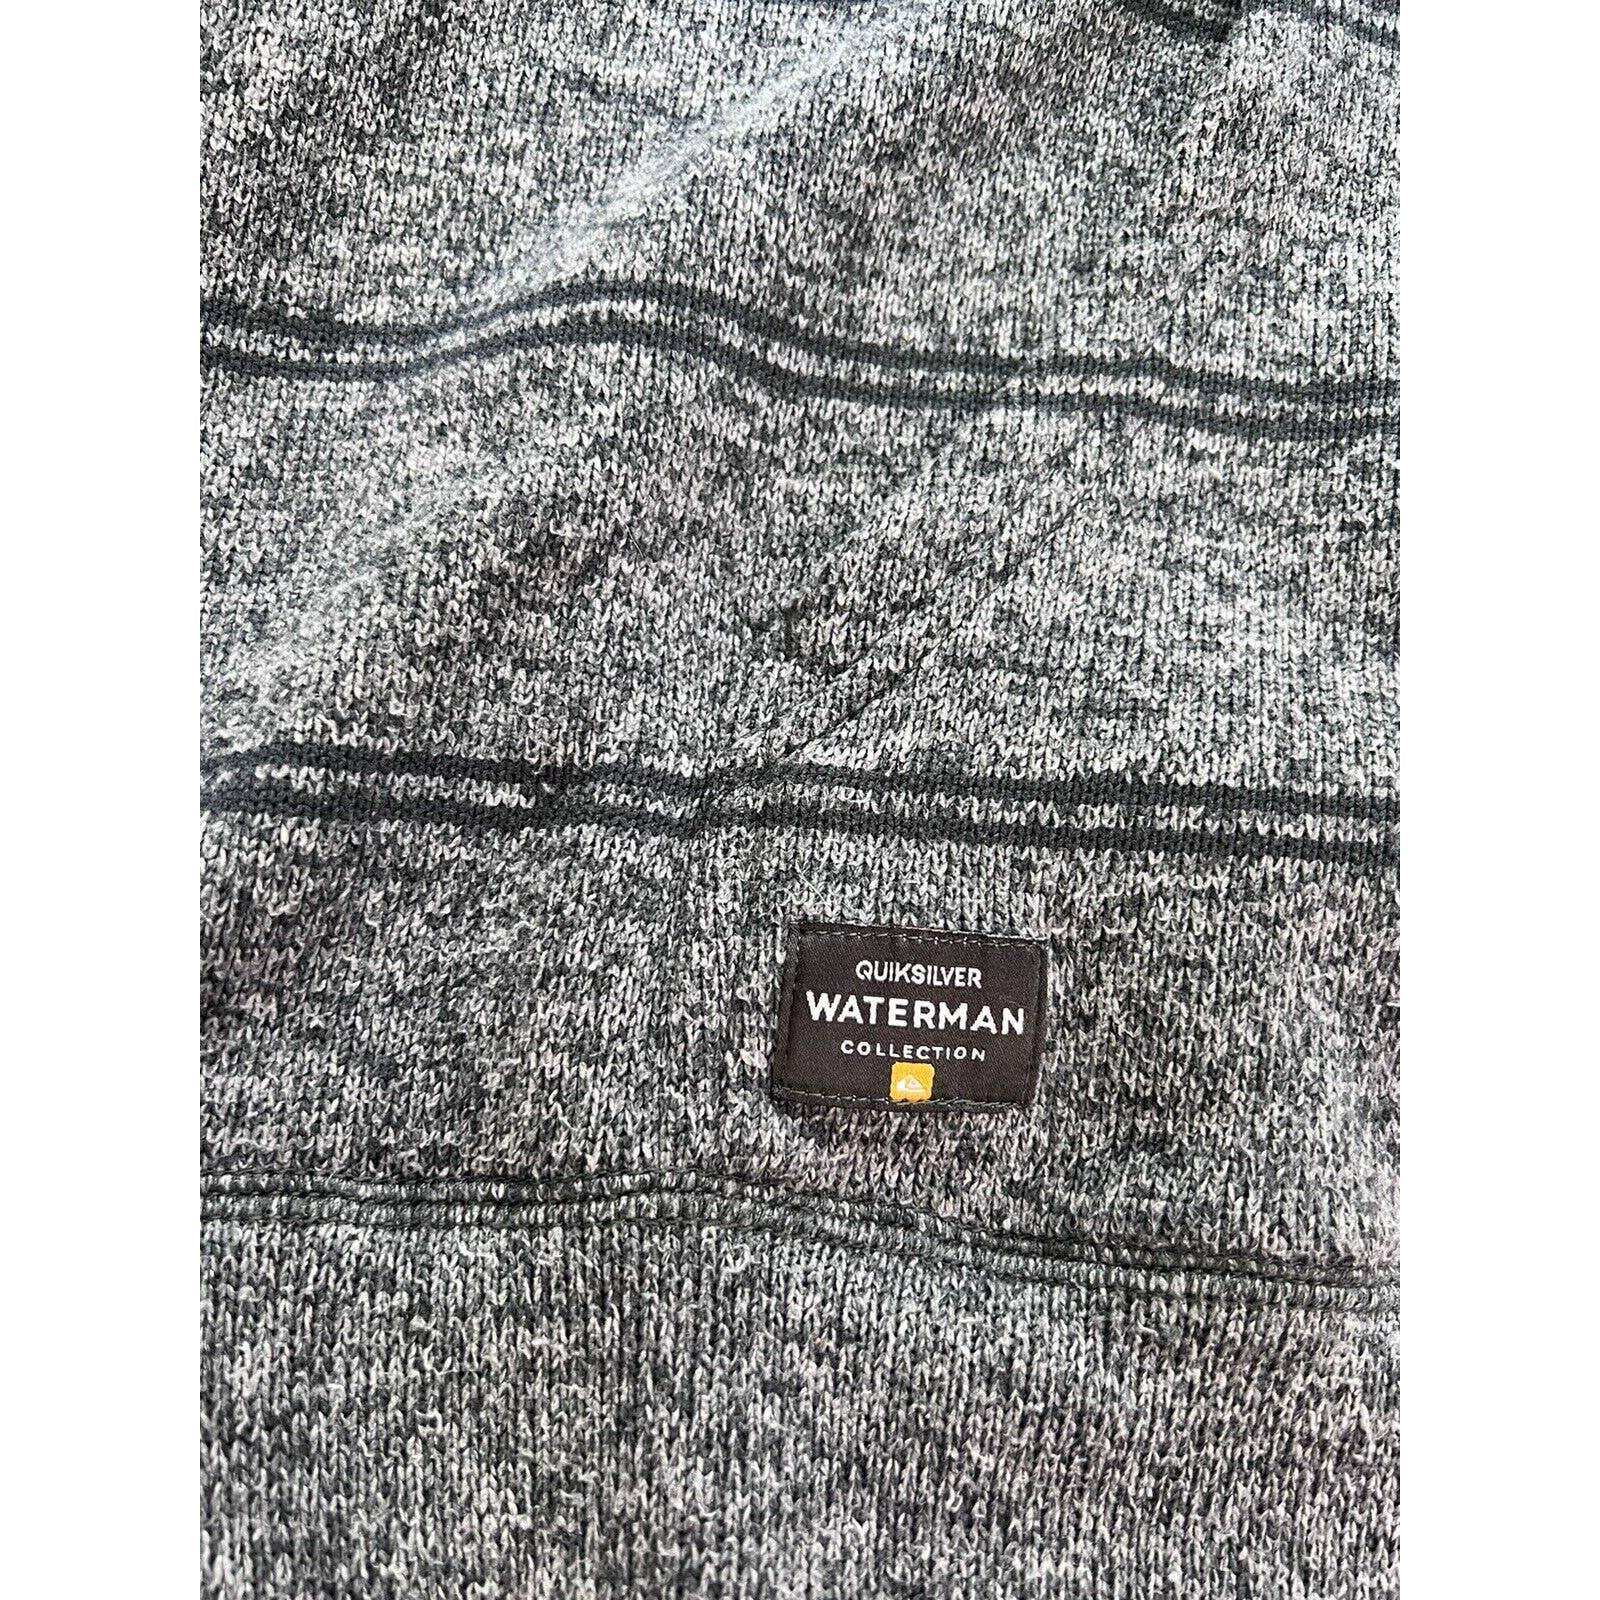 Quicksilver Waterman Collection Pullover Sweater Men’s XXL 2XL Gray Striped